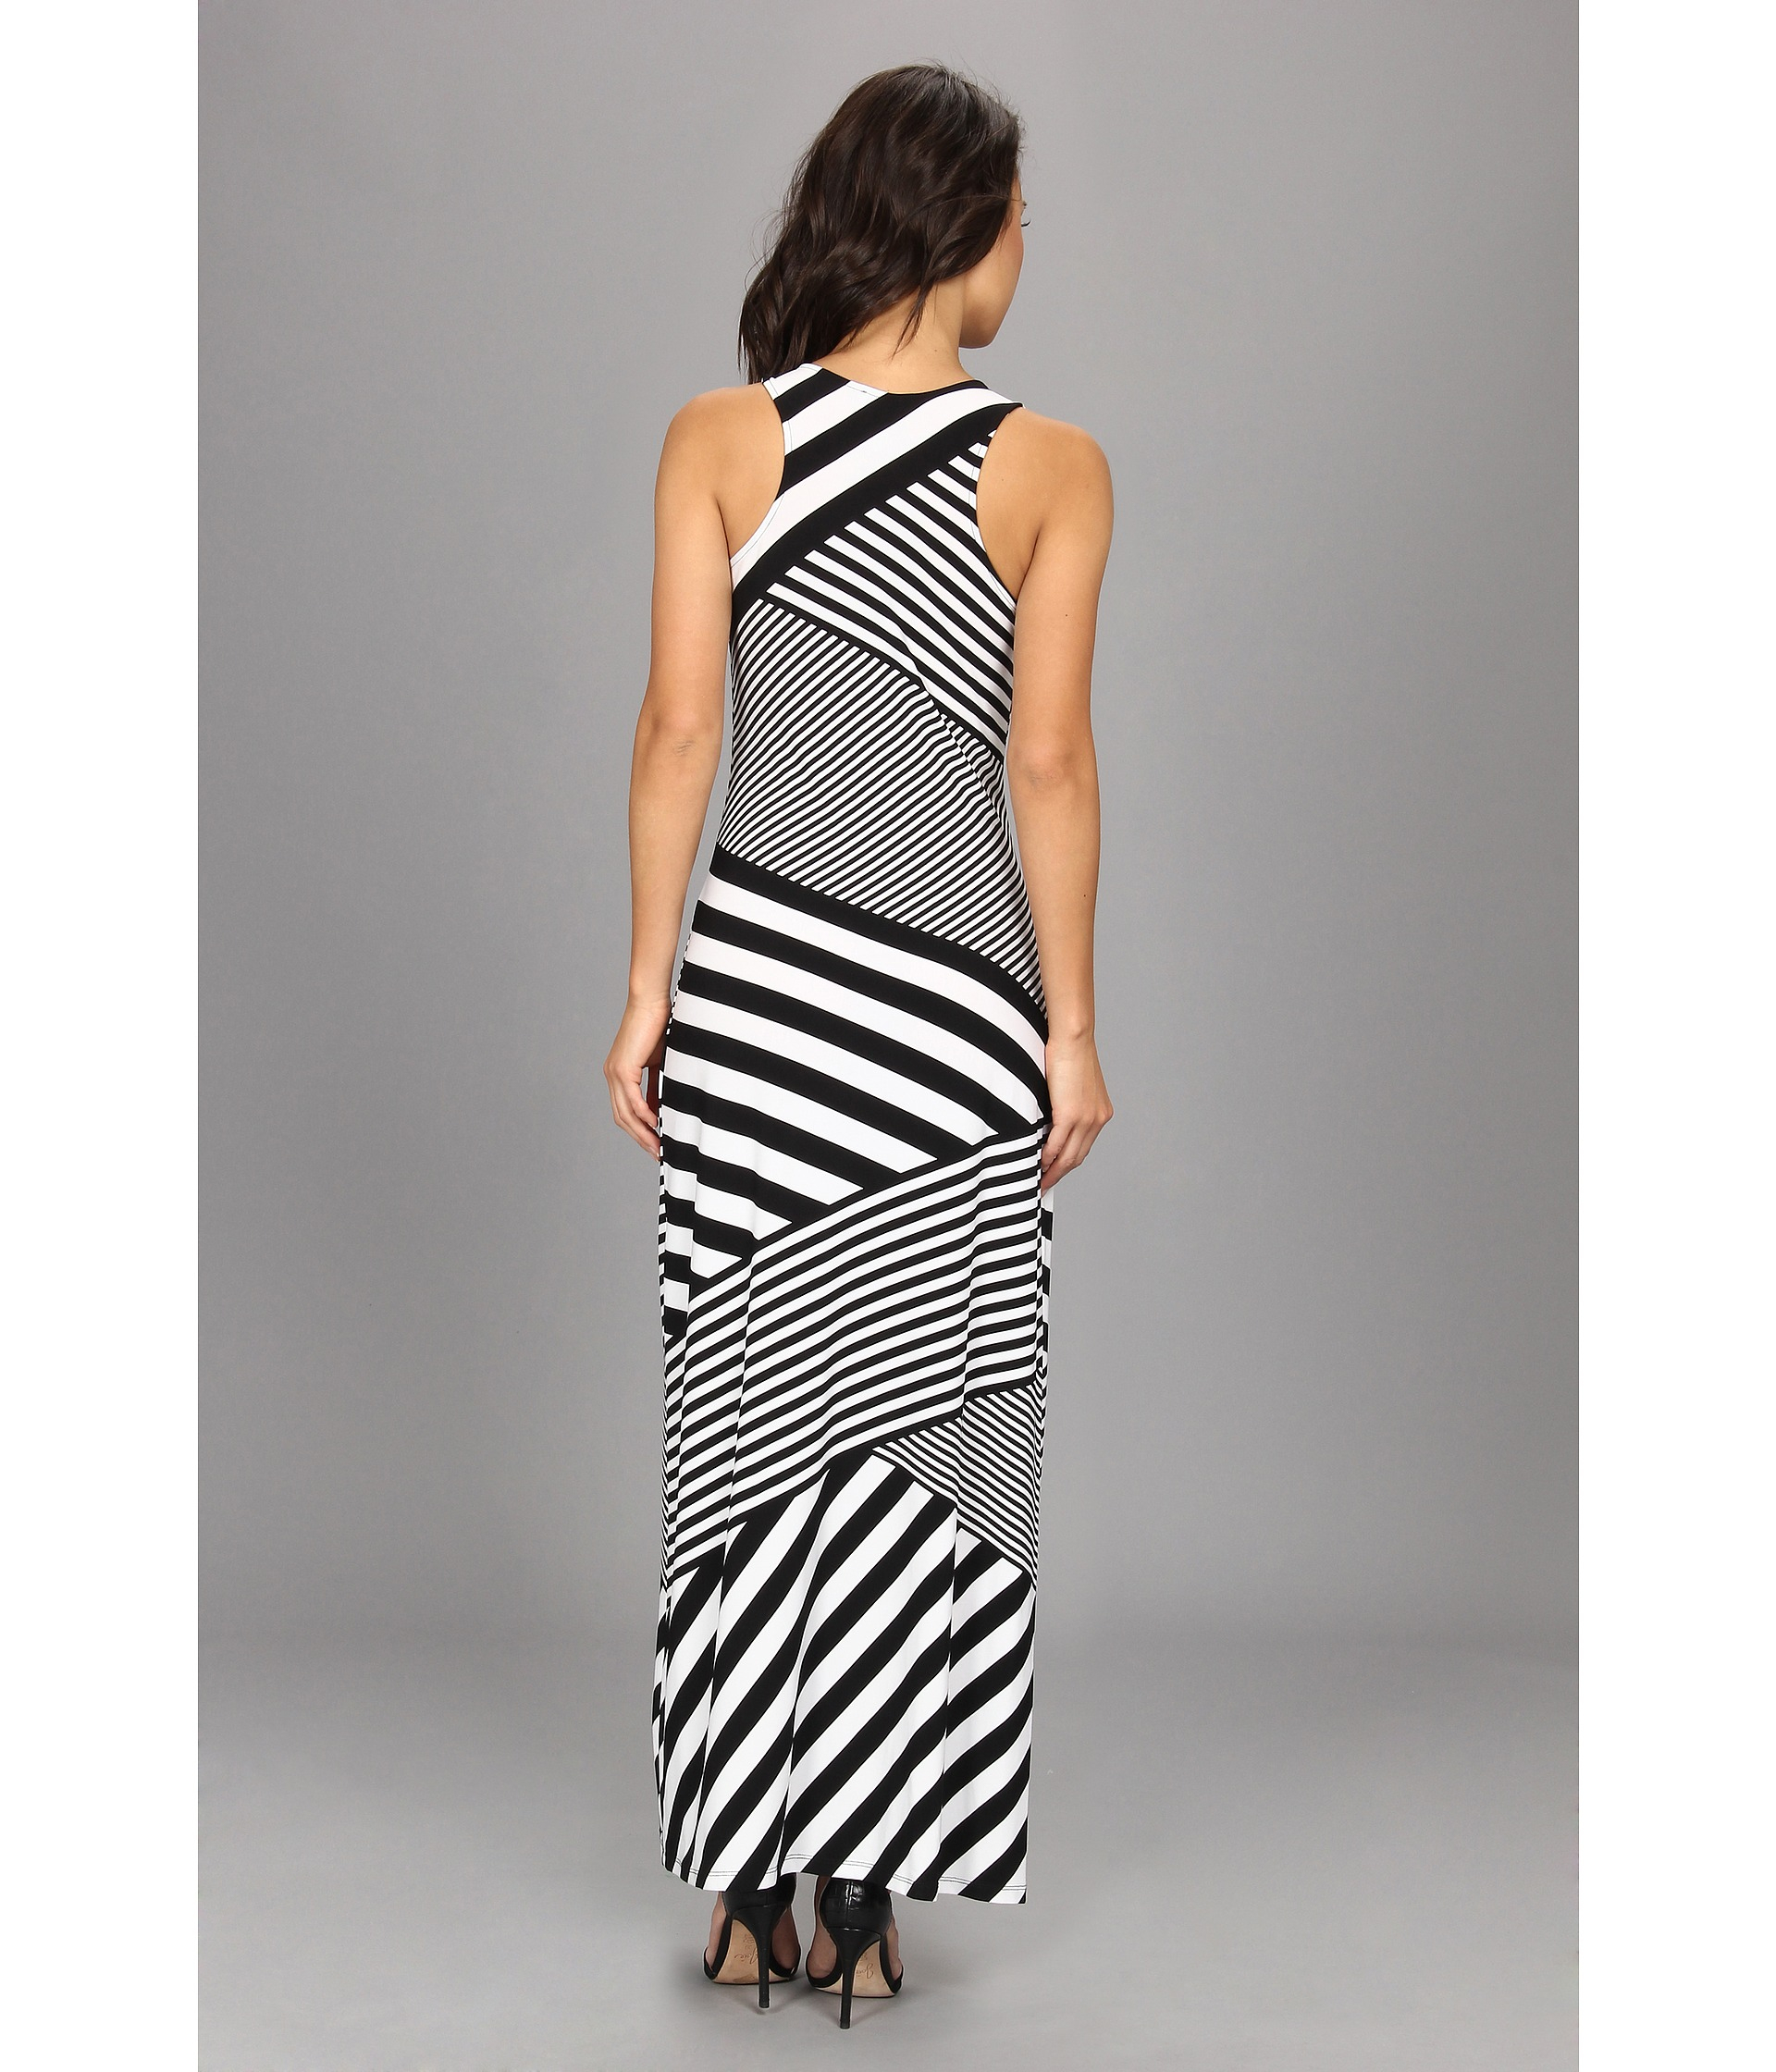 Calvin Klein Striped Mj Maxi Dress in Black/White/White (Black) - Lyst